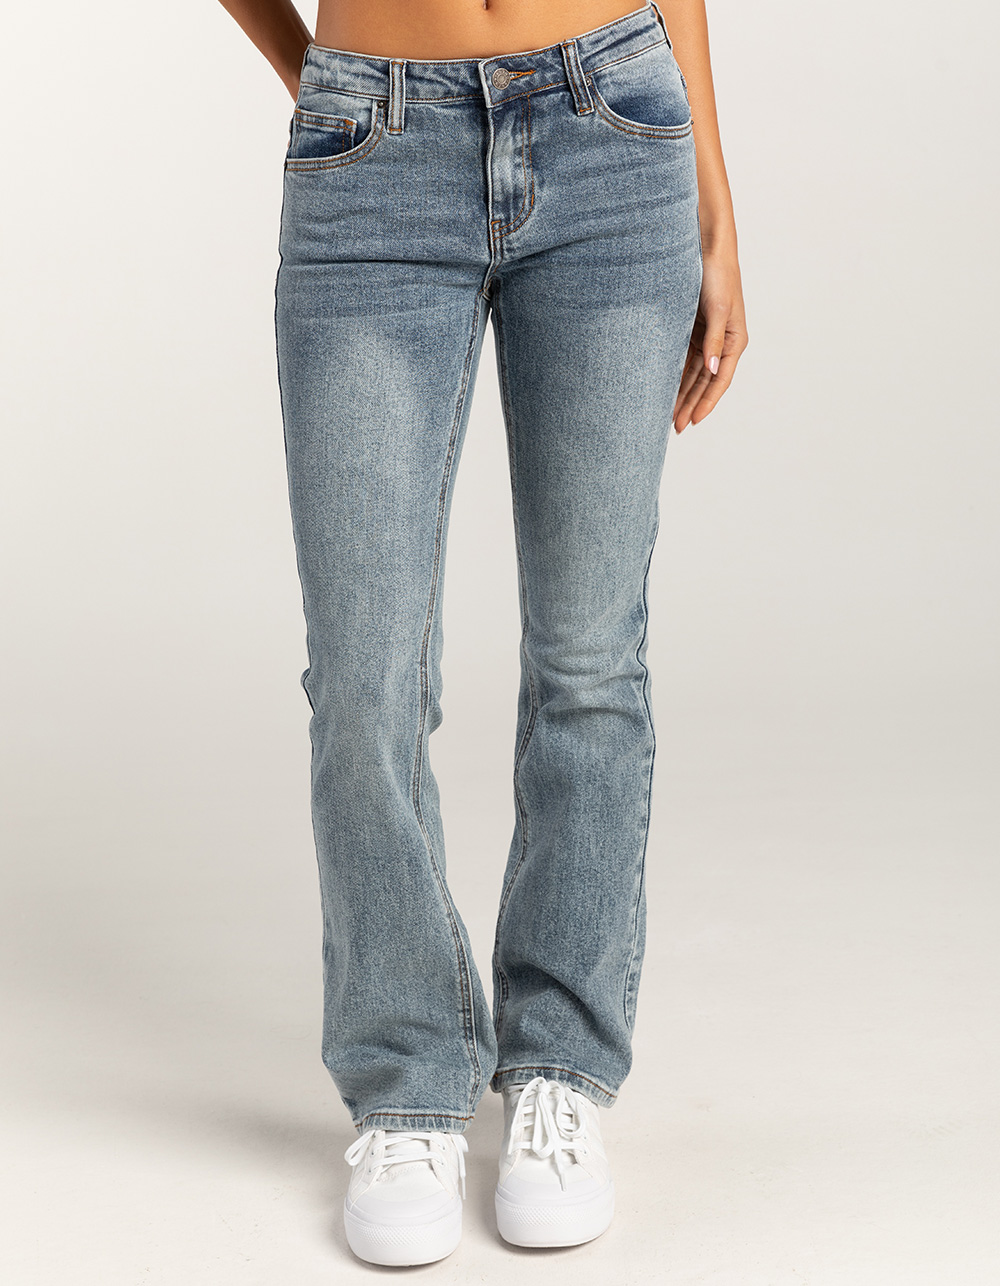 GUESS Originals Mid-Rise Bootcut Jeans